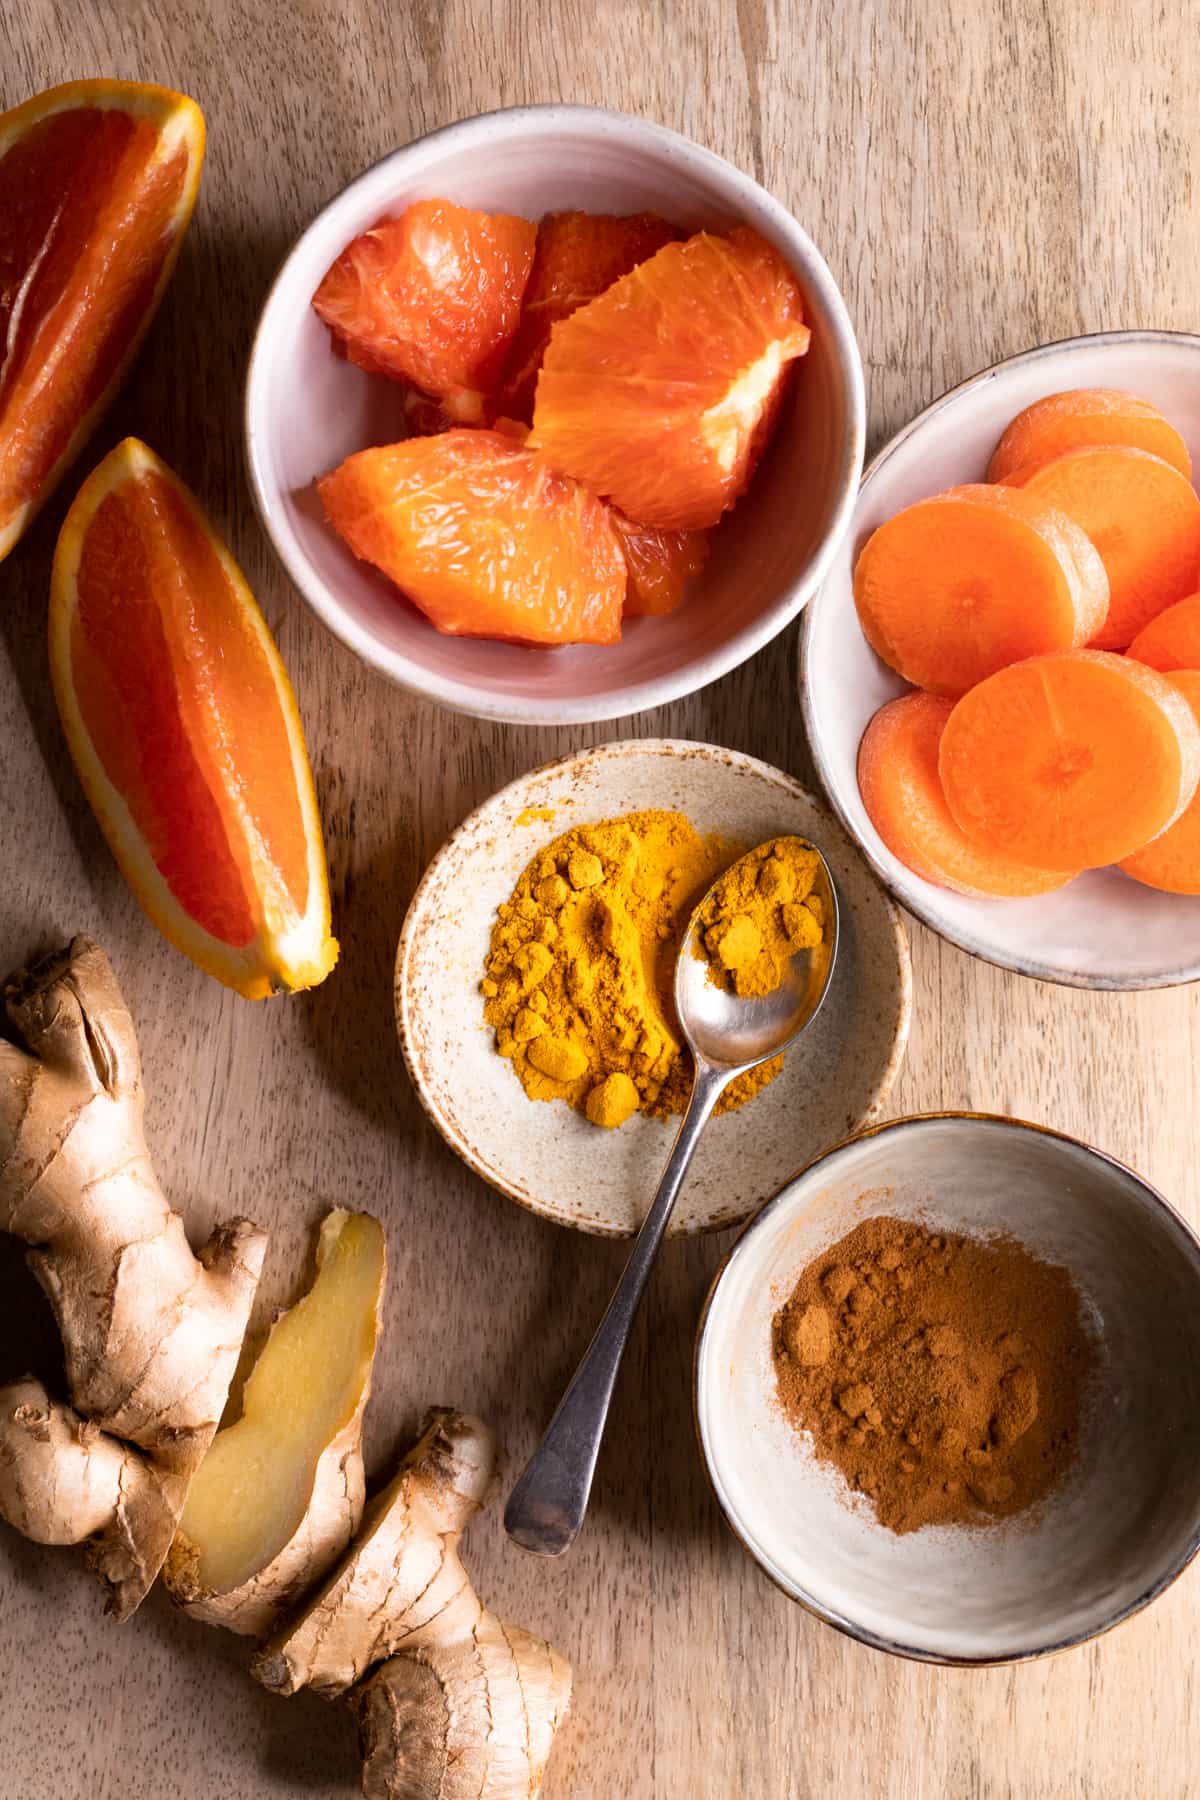 Ingredients for Orange Ginger Carrot Smoothie